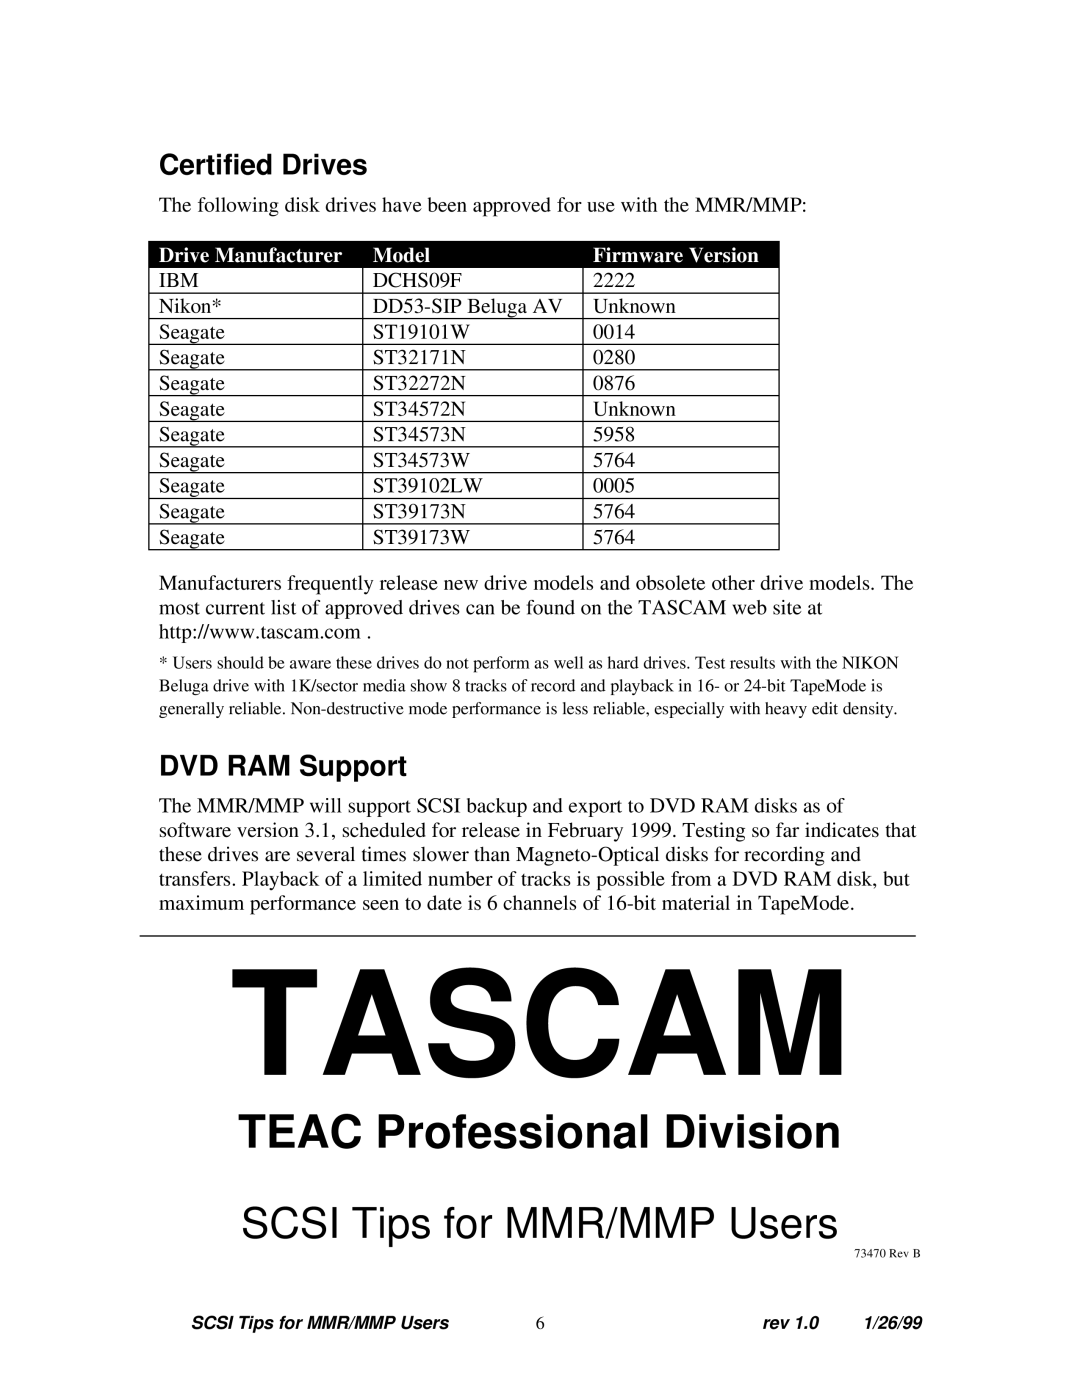 Tascam MMP-16, MMR-8 manual Certified Drives, DVD RAM Support 